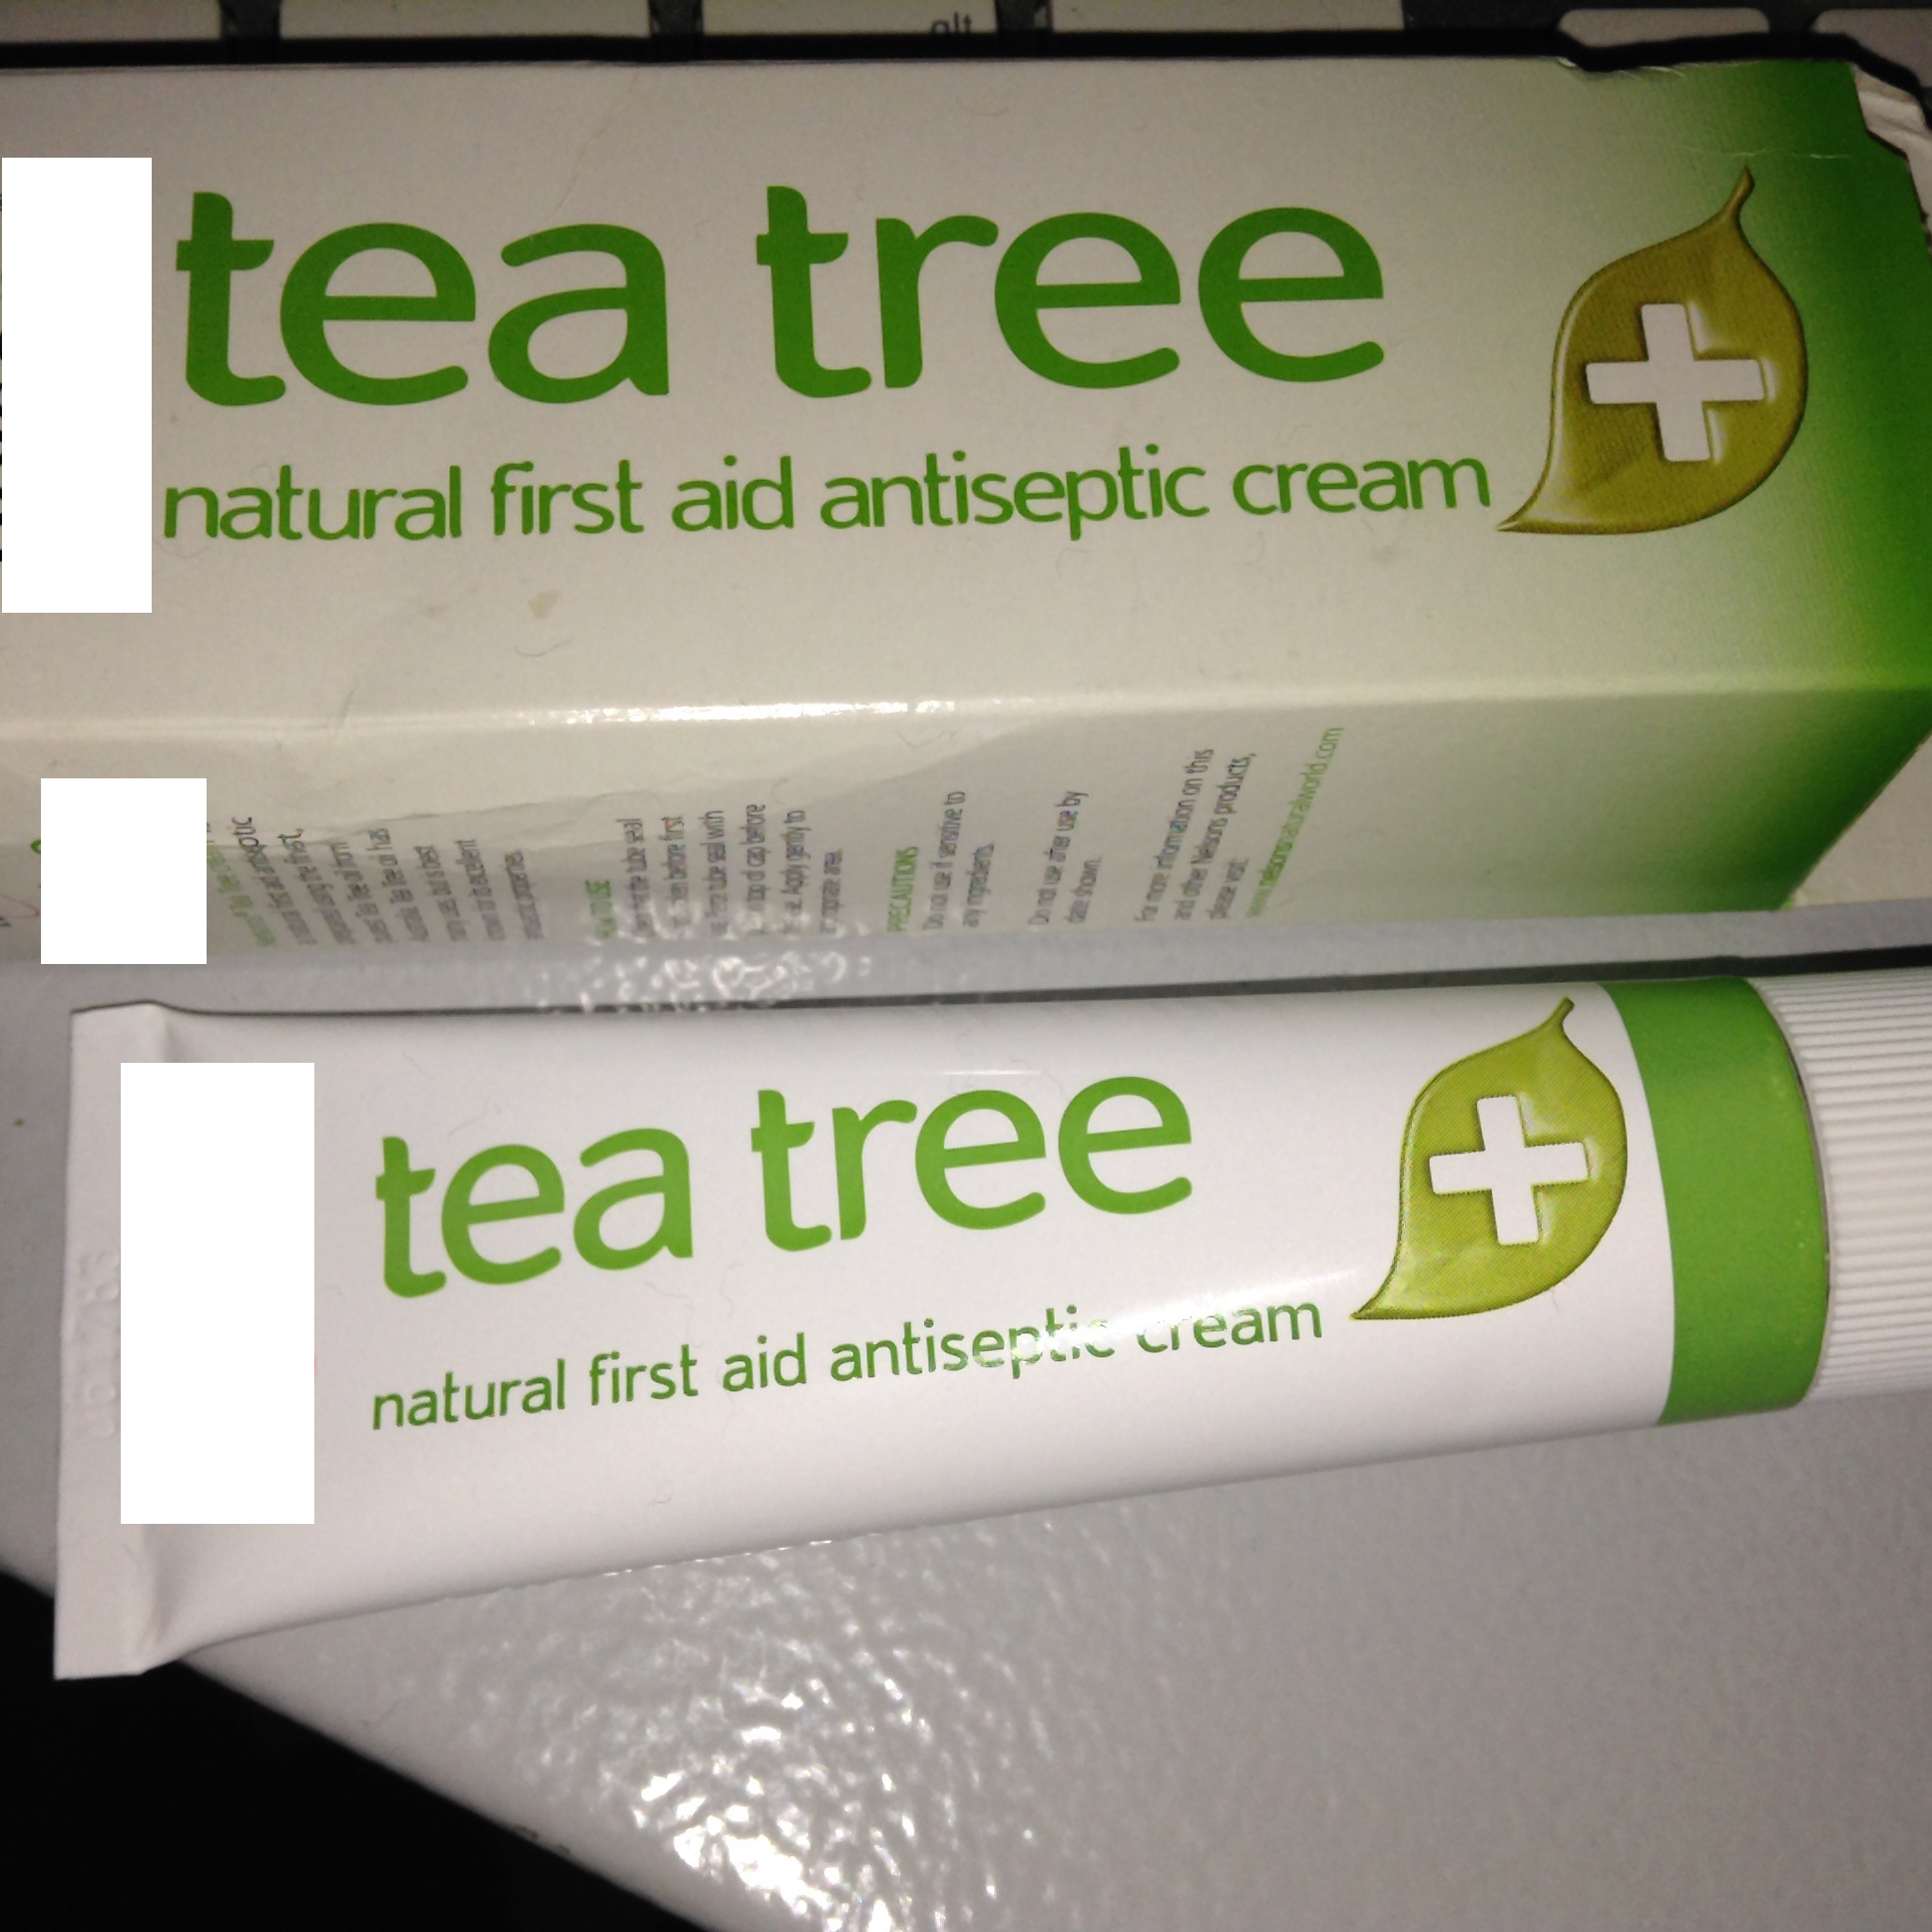 Nelsons tea tree oil cream